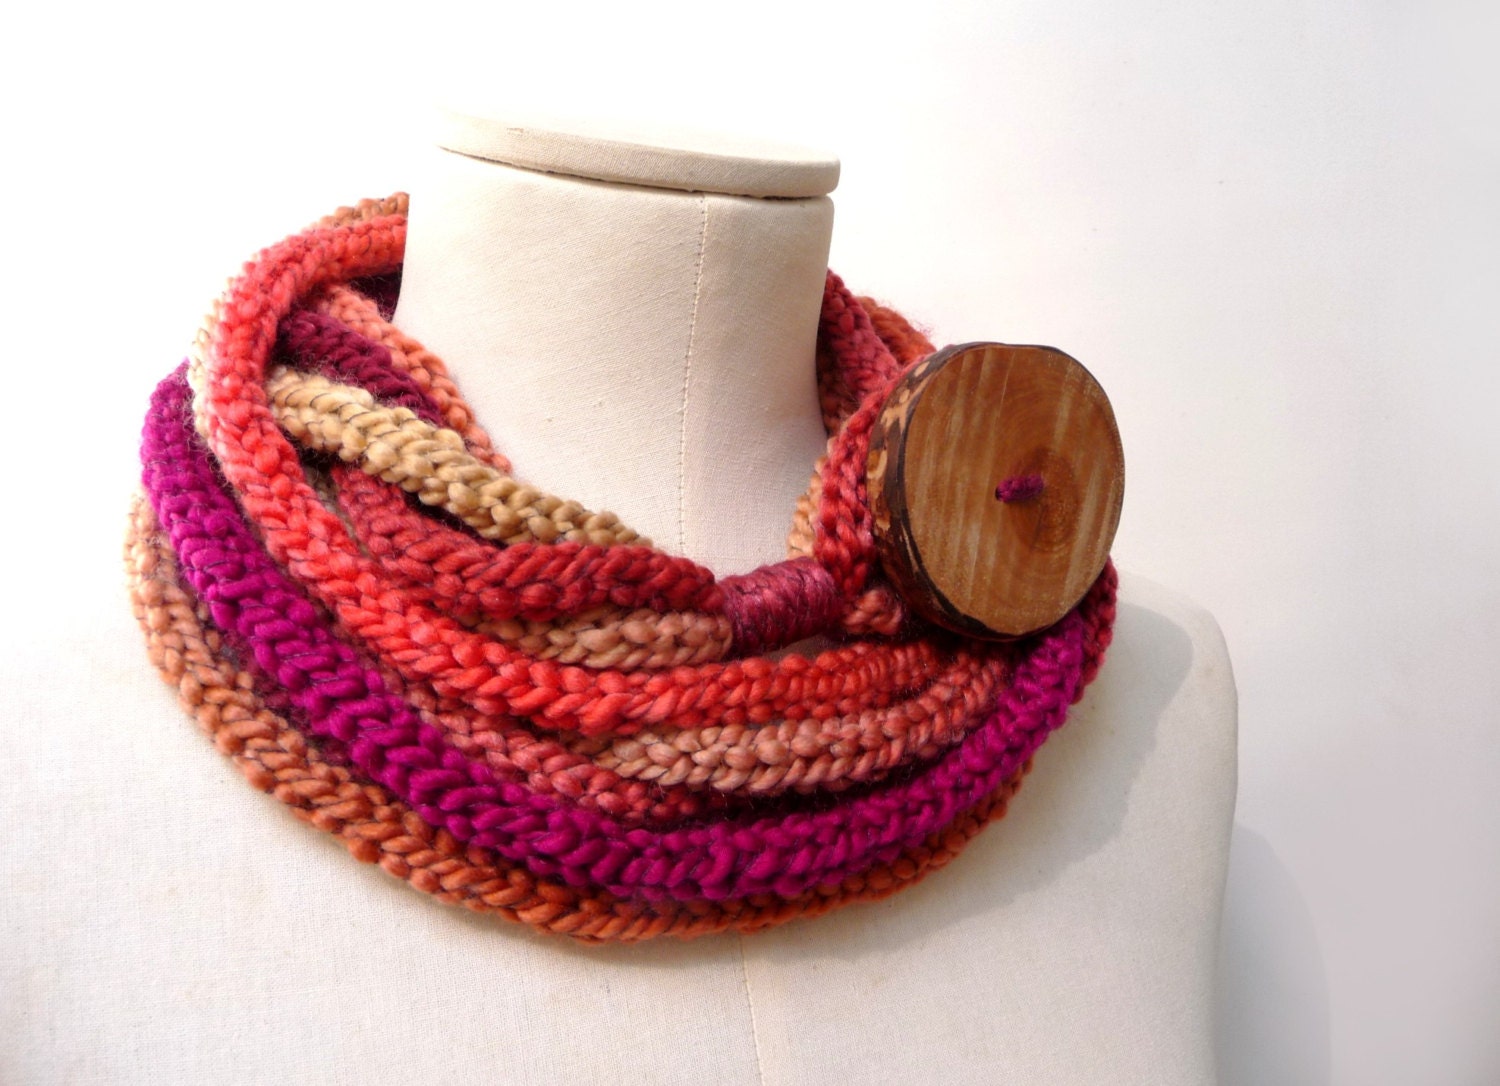 Knit Infinity Scarf Necklace, Loop Scarlette Neckwarmer - Red, Purple, Orange, Mustard Yellow ombre yarn with big wood button - Handmade - ixela